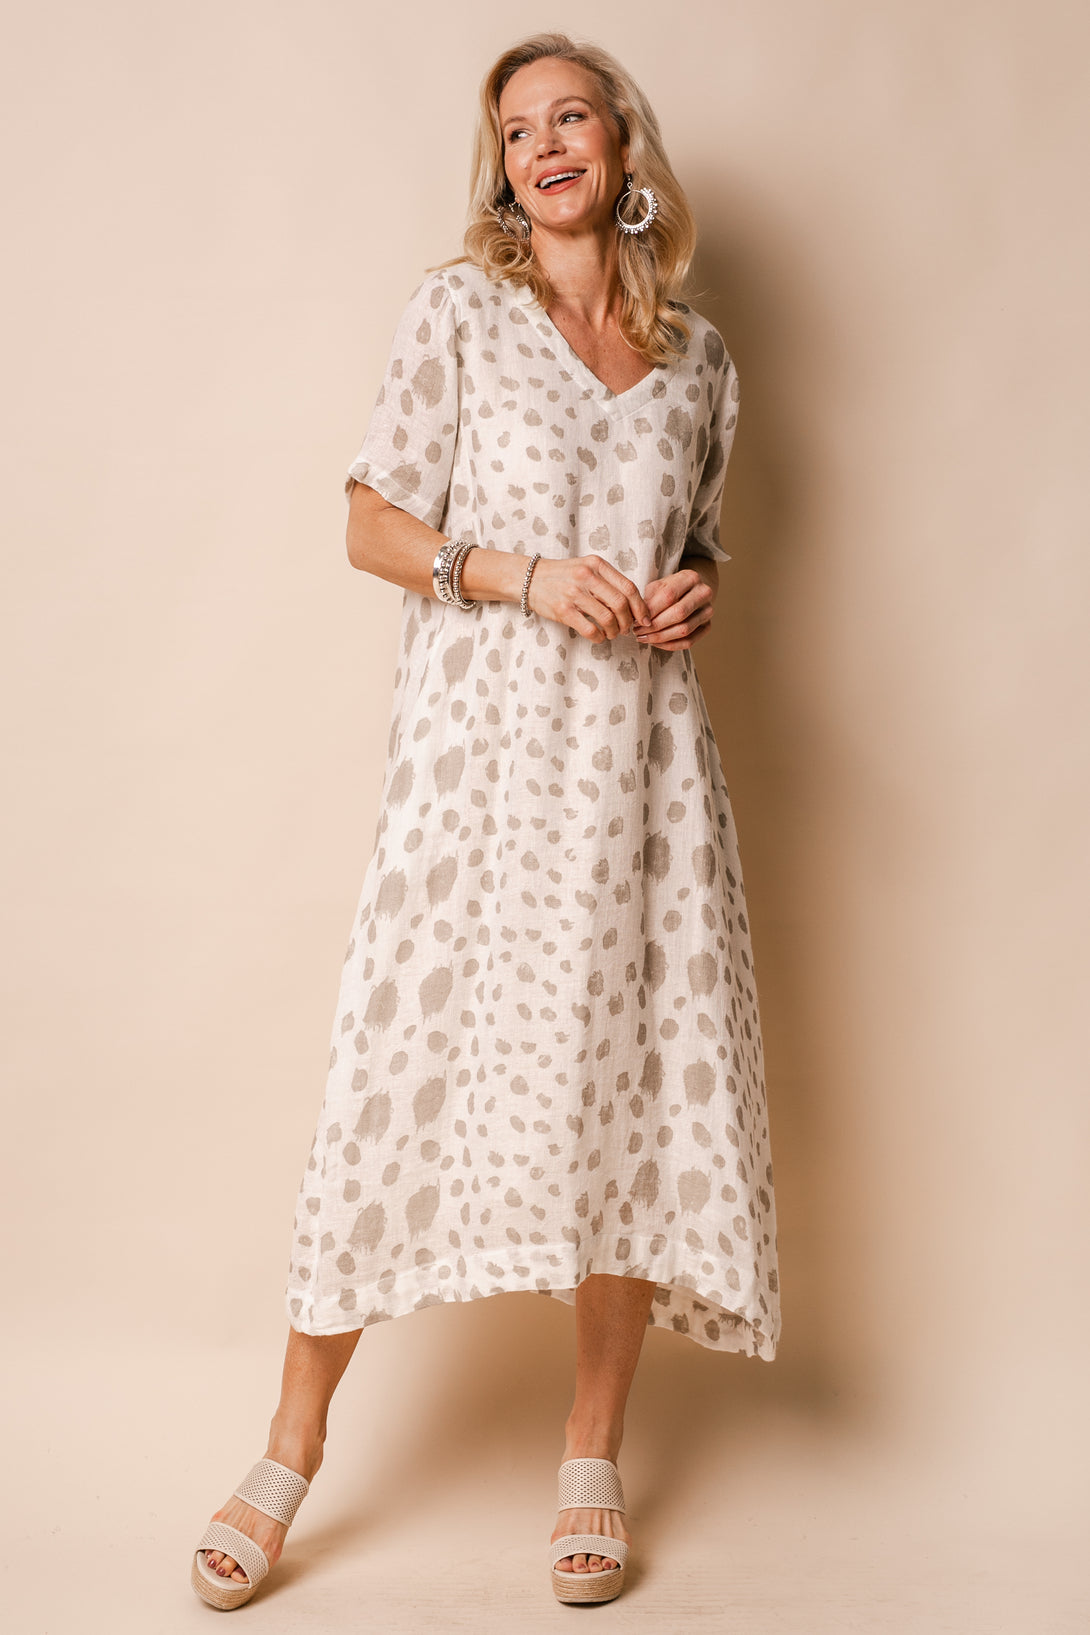 Cady Linen Dress in Cream - Imagine Fashion